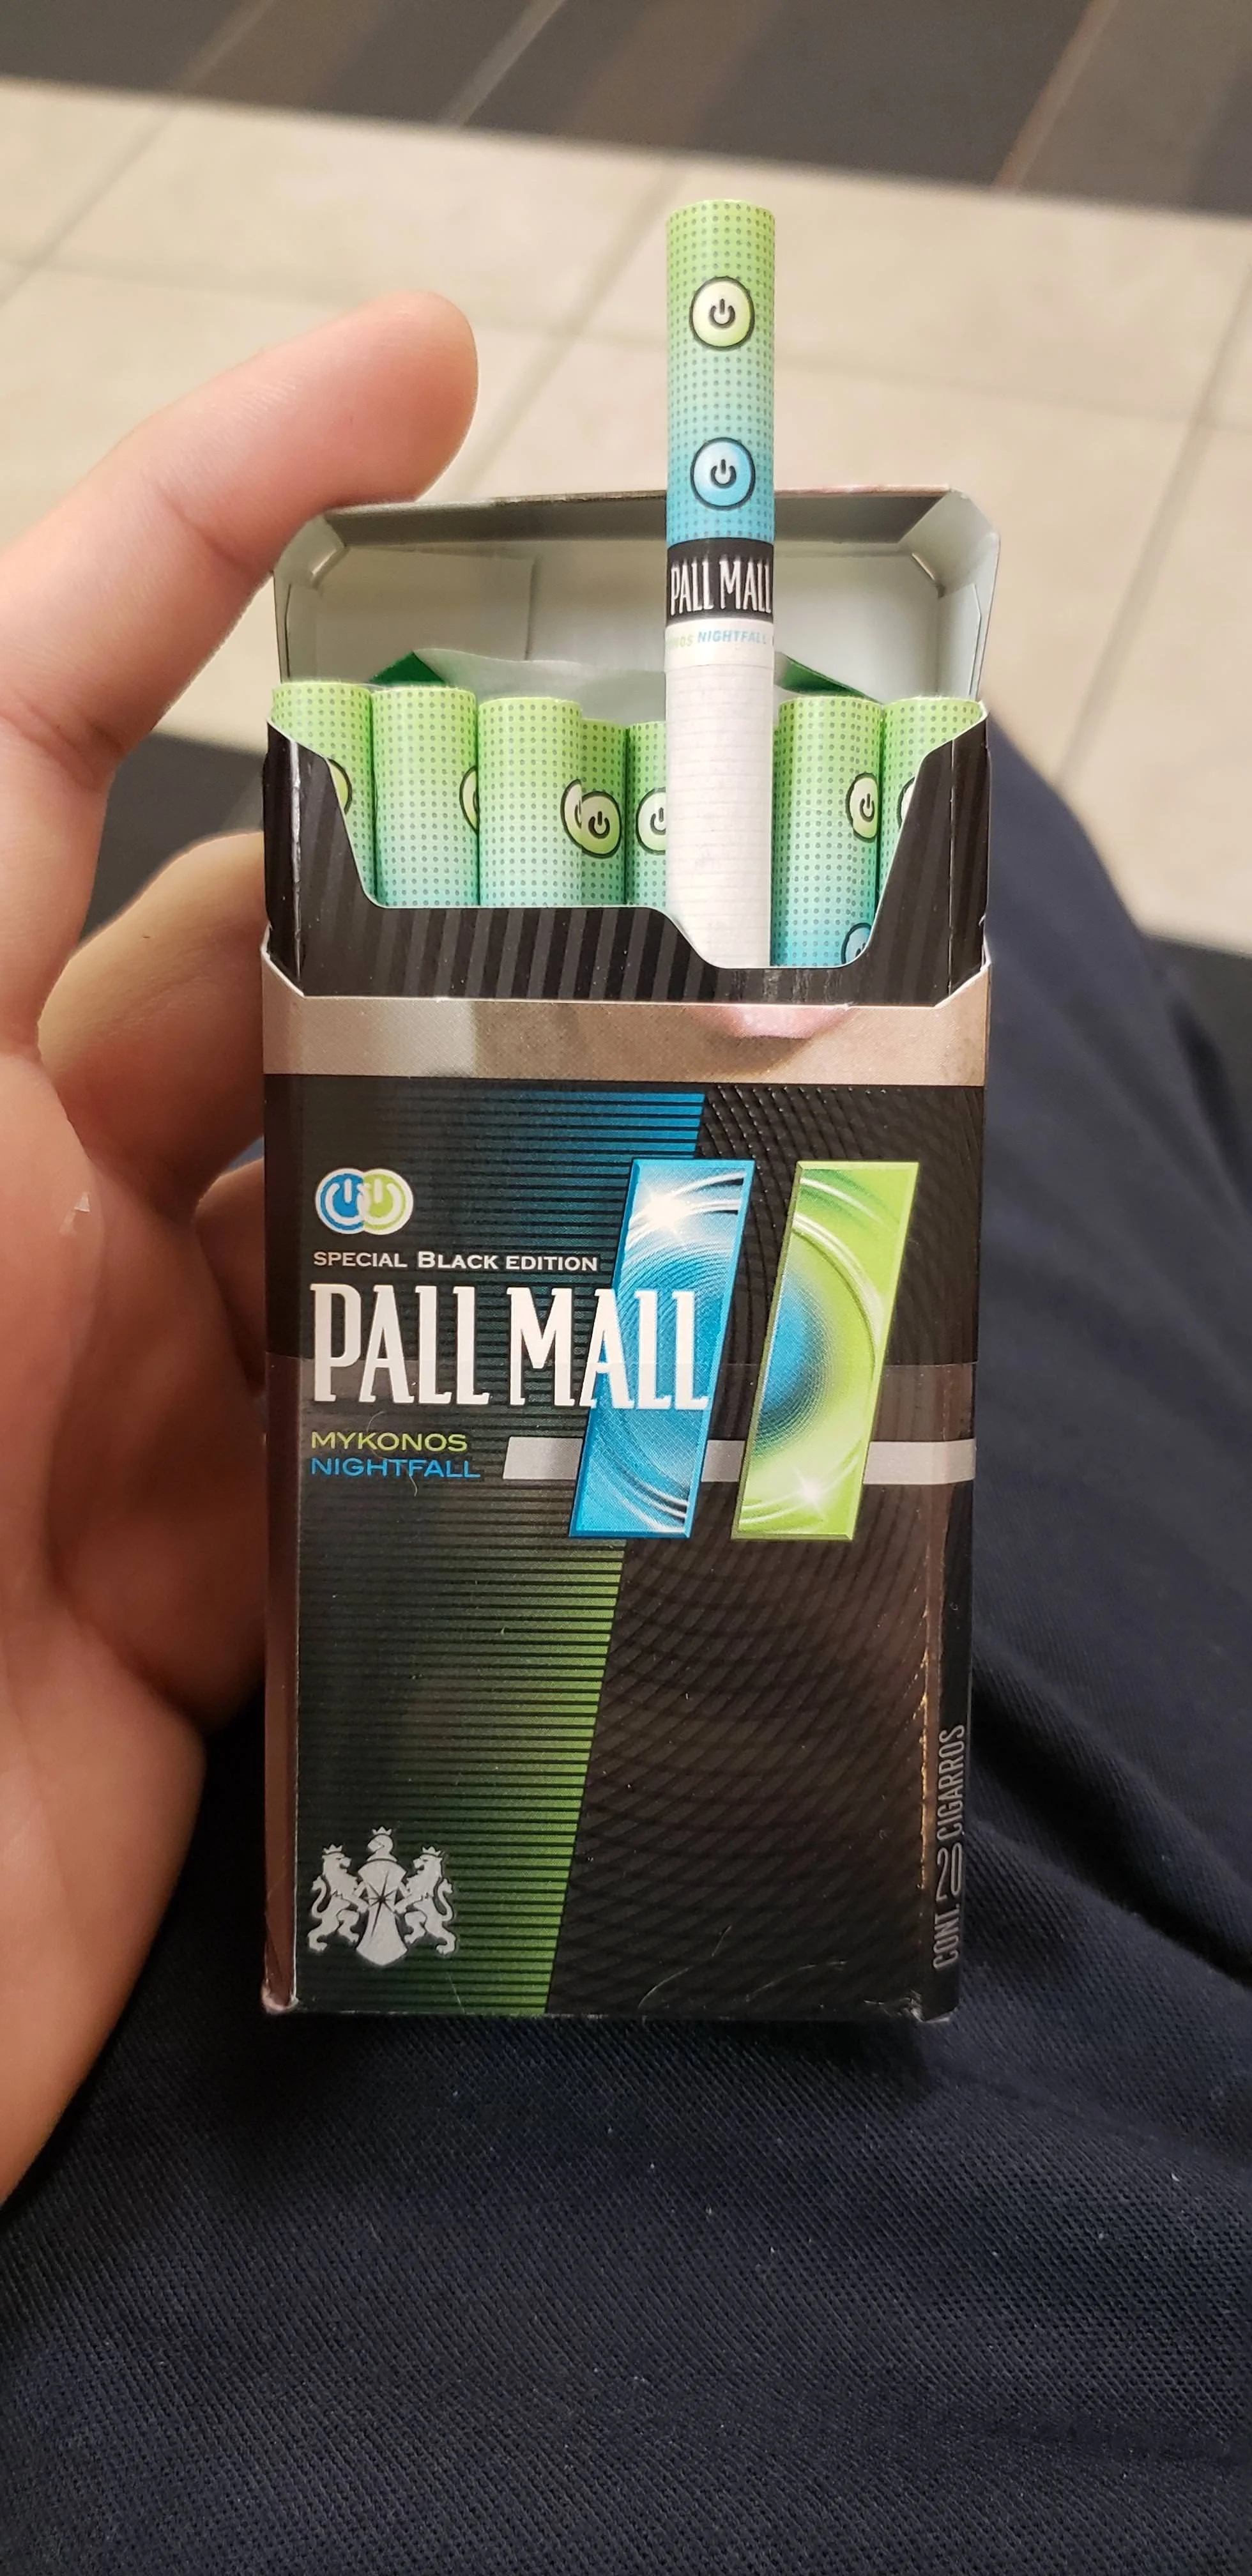 Pall Mall Mykonos Nightfall cigarettes 10 cartons - Click Image to Close